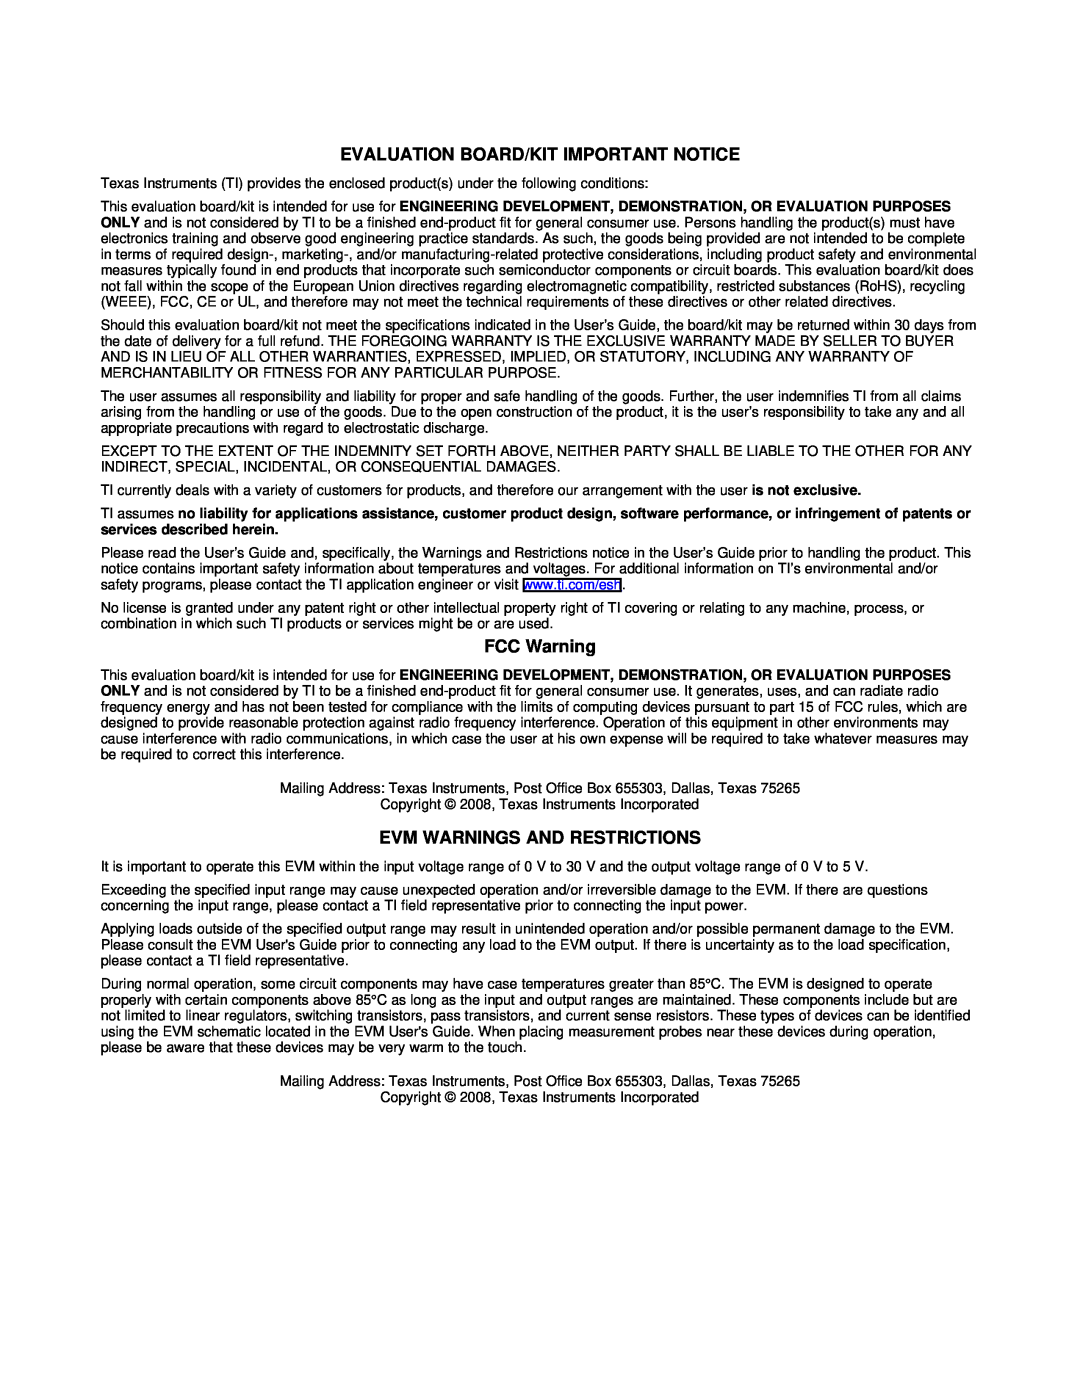 Texas Instruments SLAU245, SN65HVS880 Evaluation Board/Kit Important Notice, FCC Warning, Evm Warnings And Restrictions 